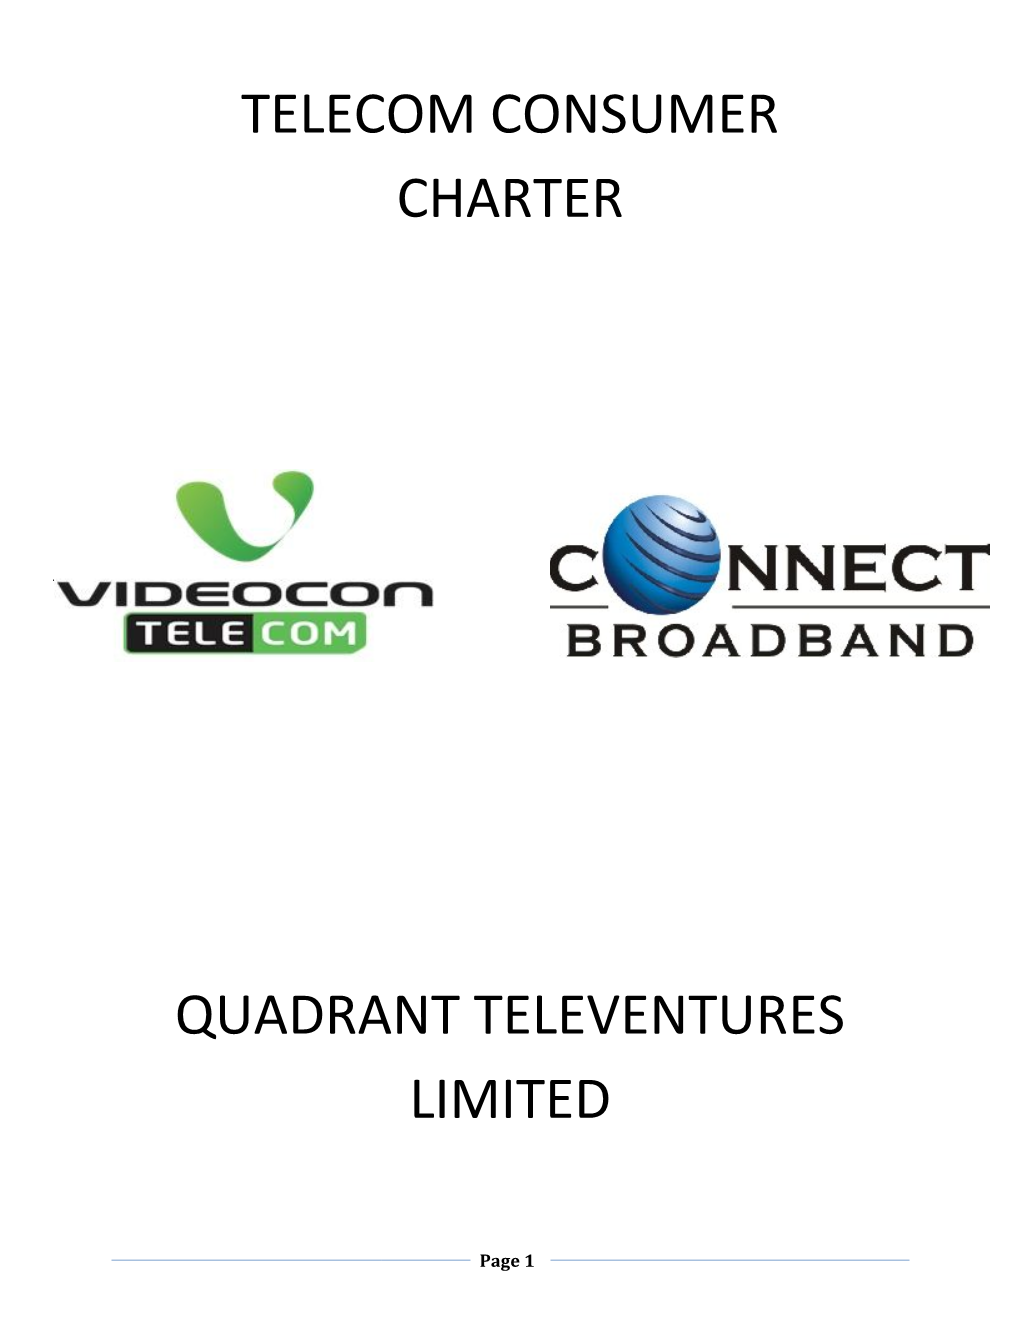 Telecom Consumer Charter Quadrant Televentures